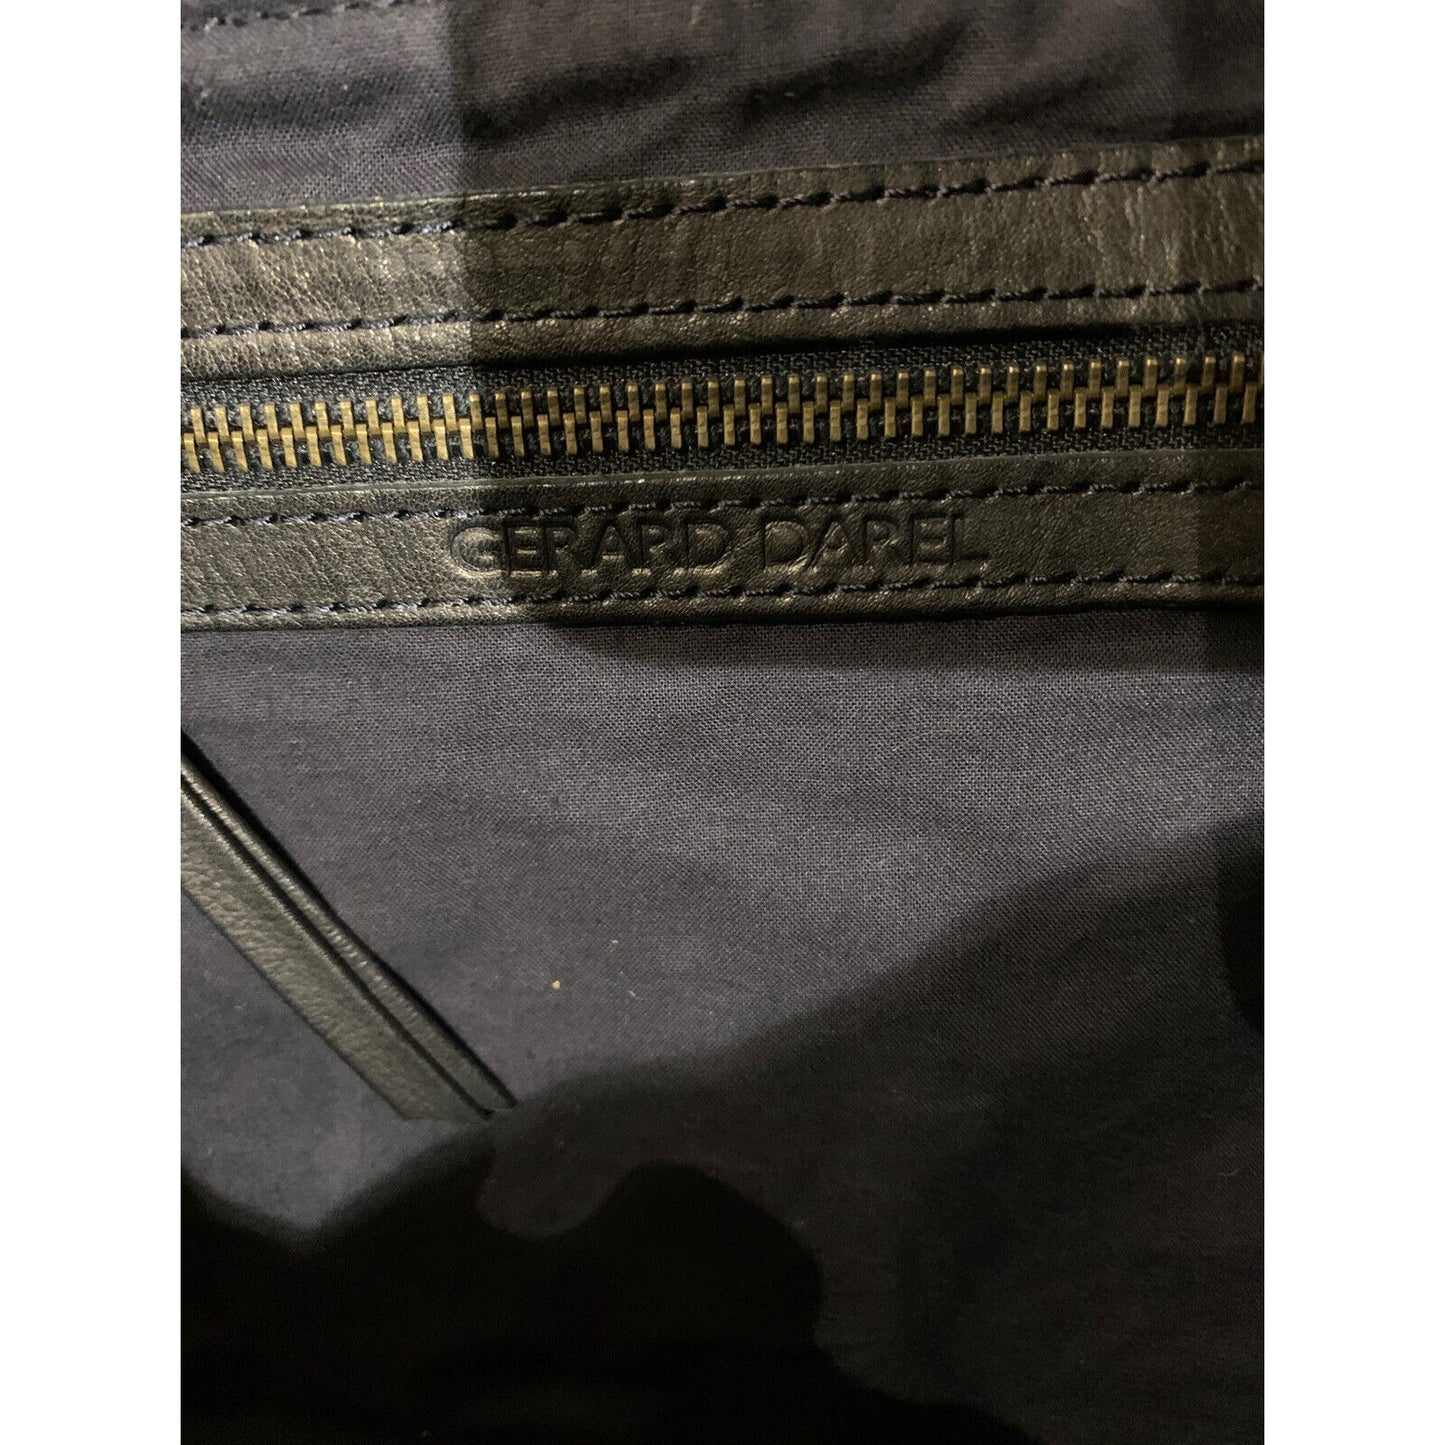 Closeup Of Handbag Zipper And Branding